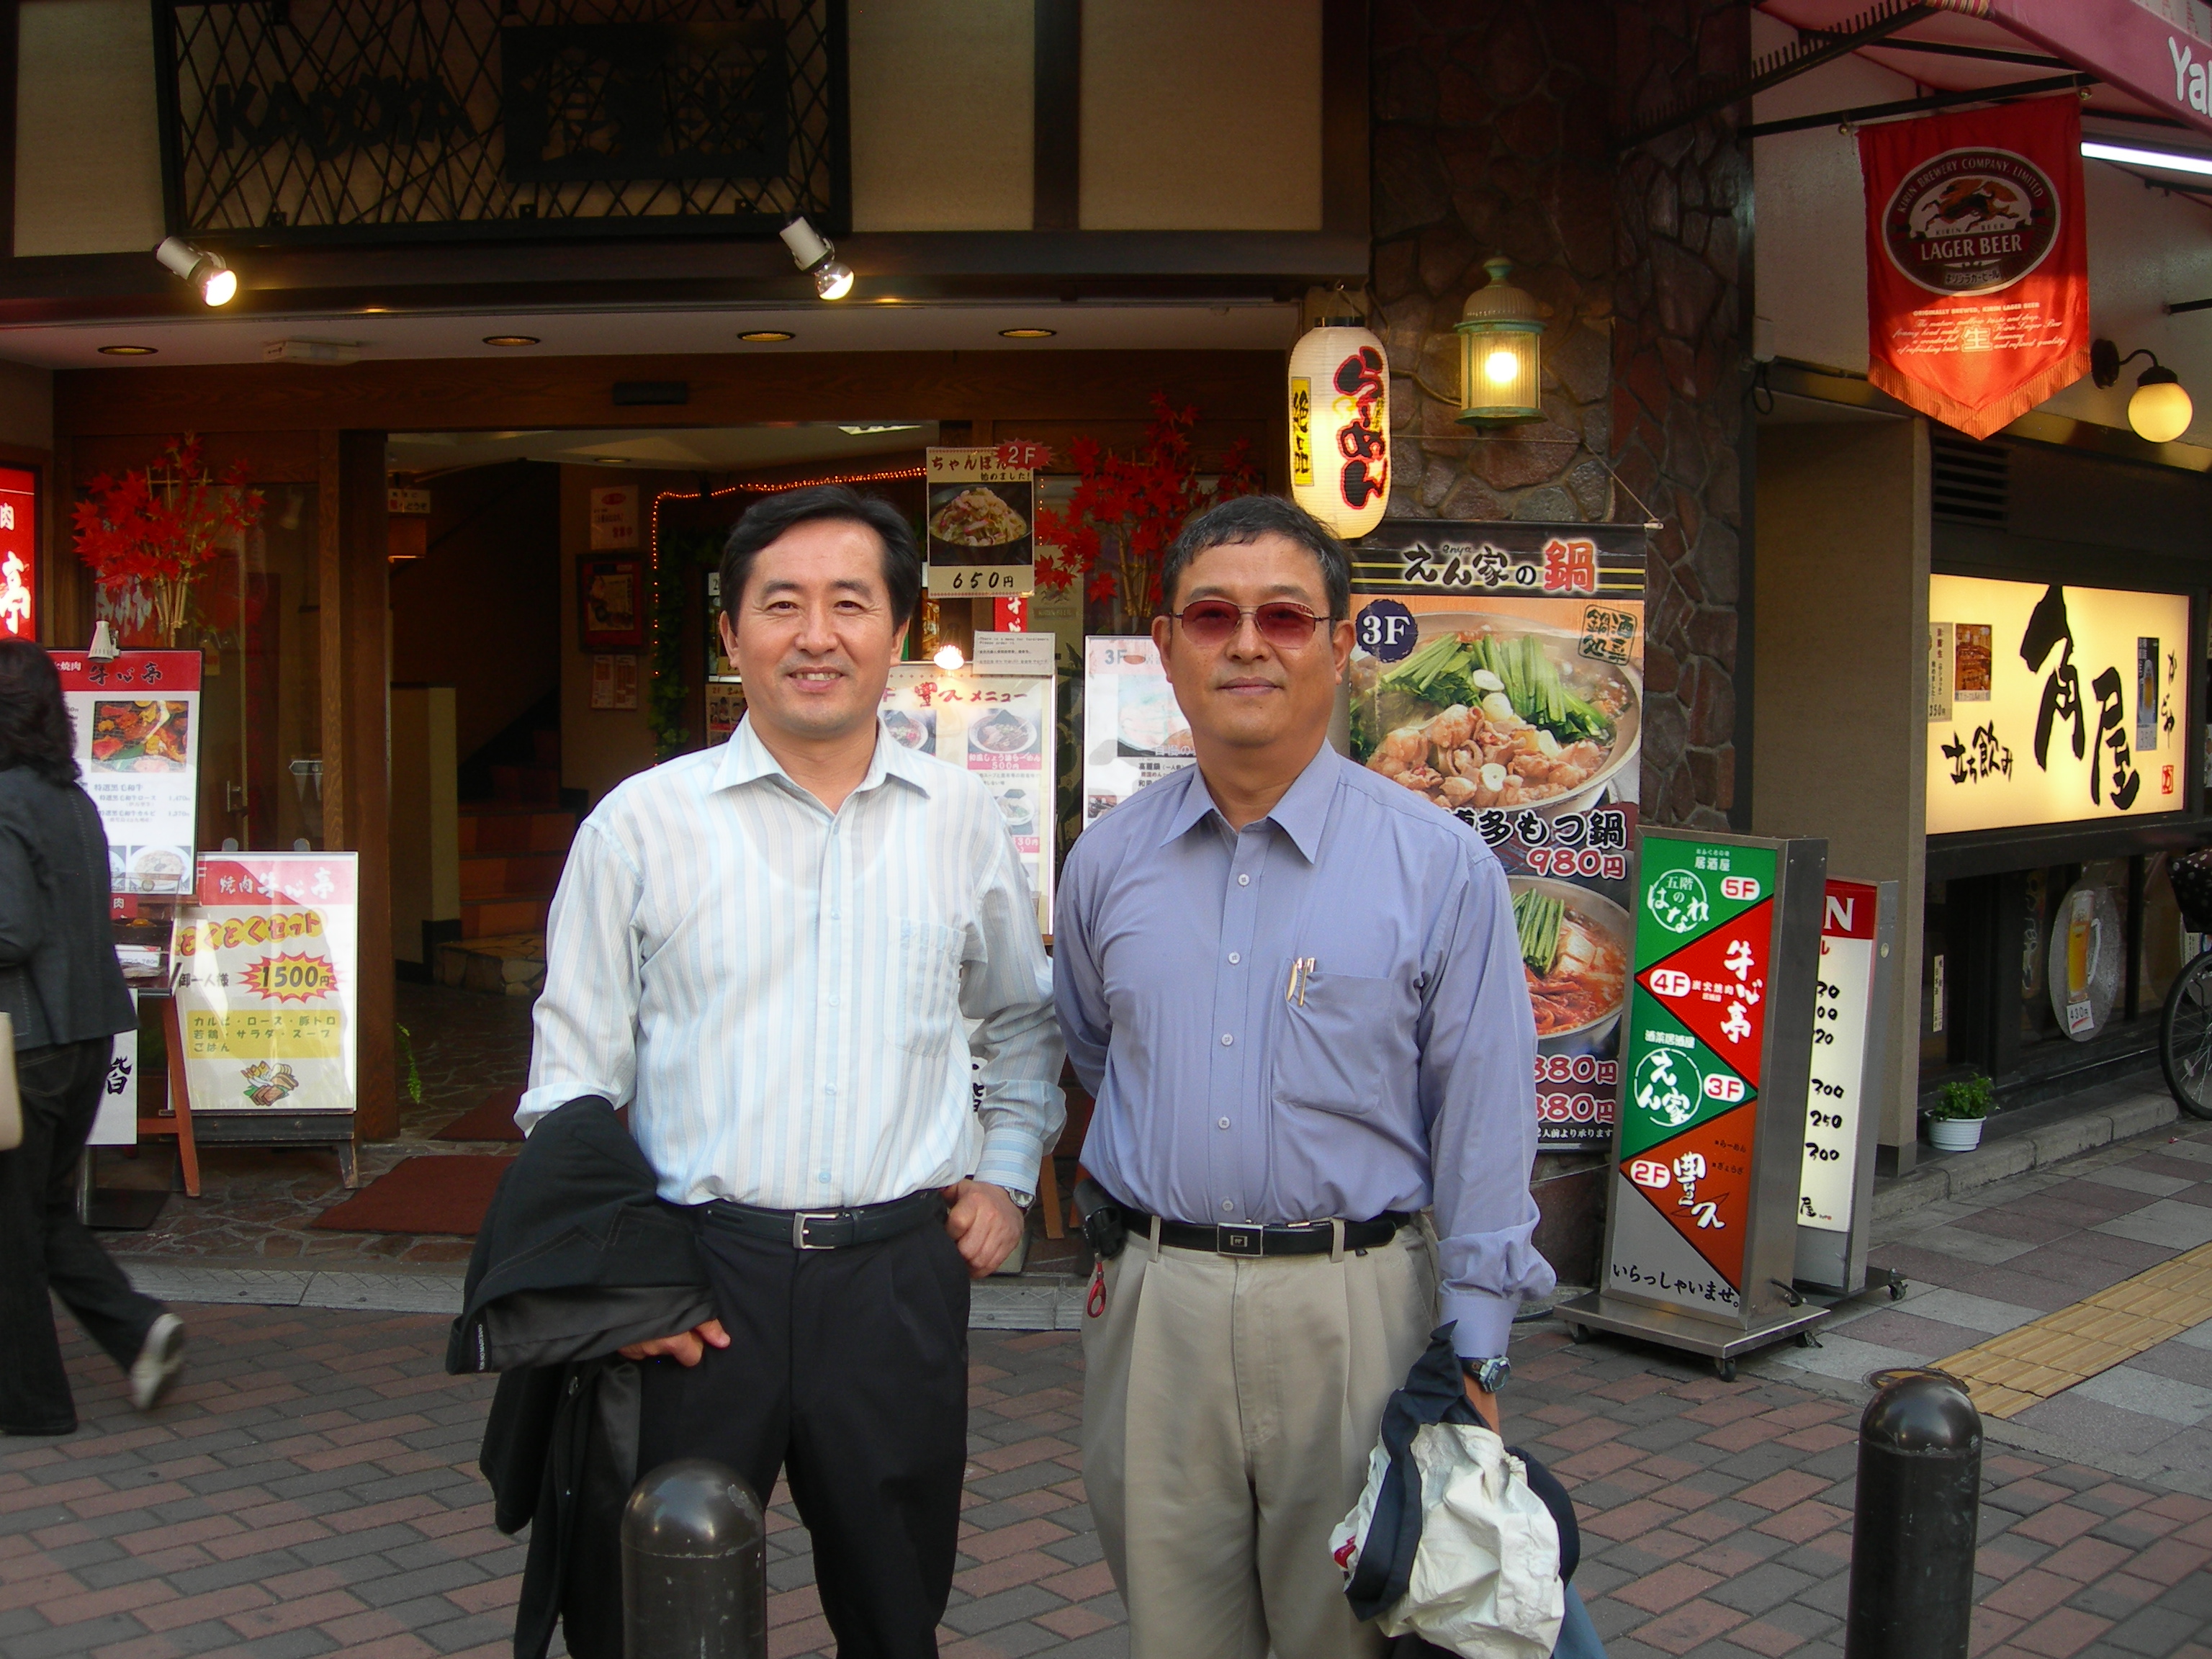 with K.C. Yang (TPC Co-Chair of IWSDA 2012)